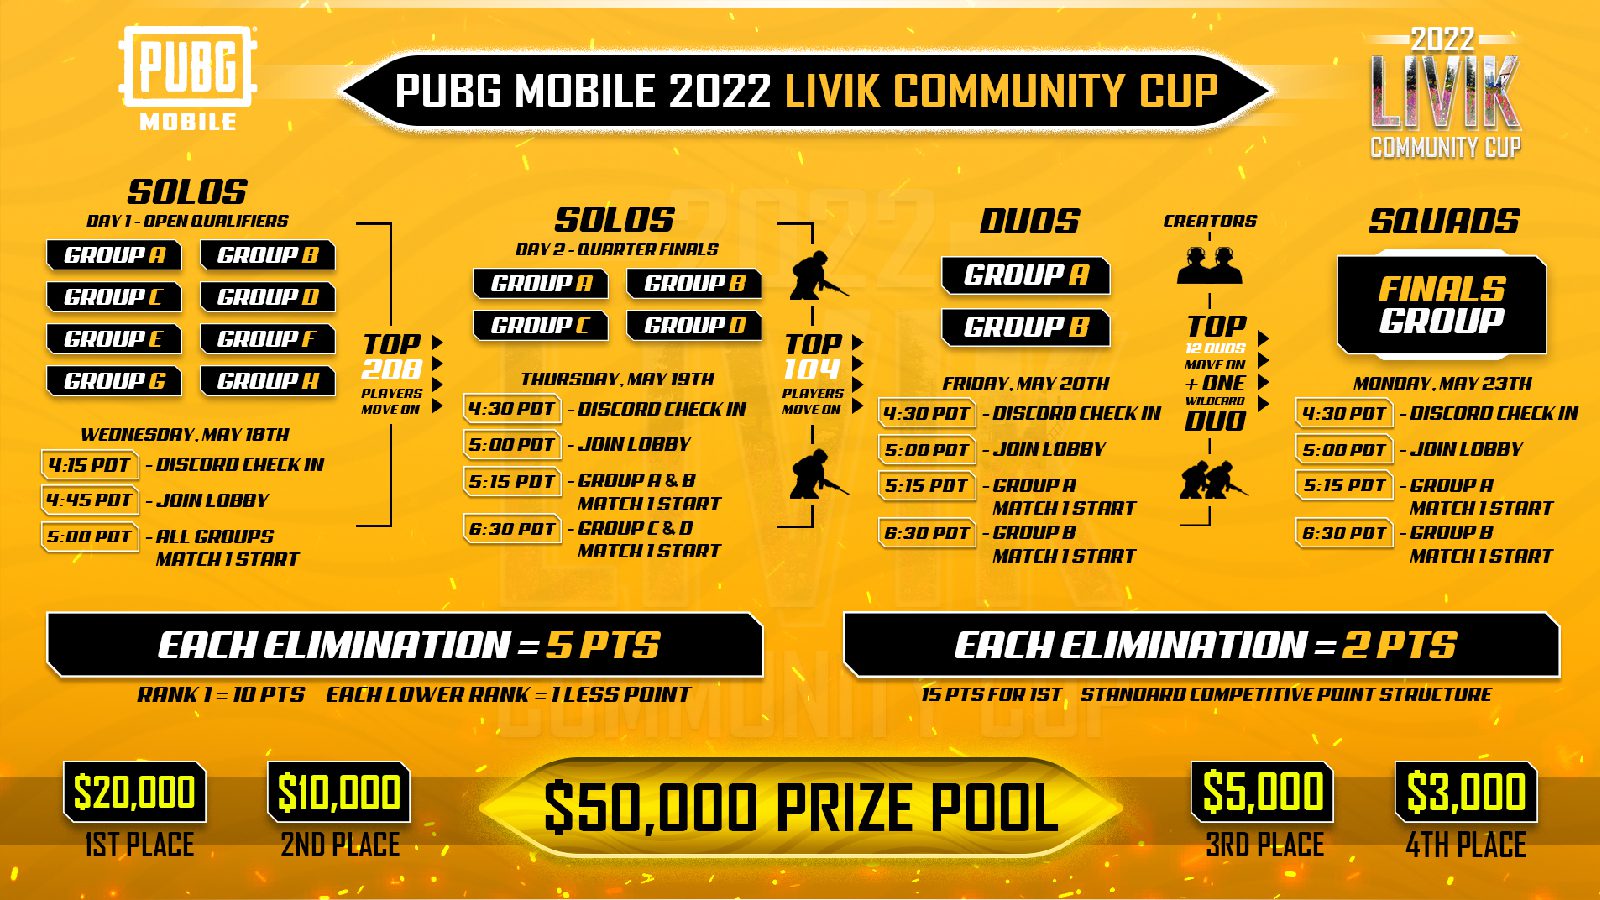 PUBG Mobile Livik Community Cup 2022